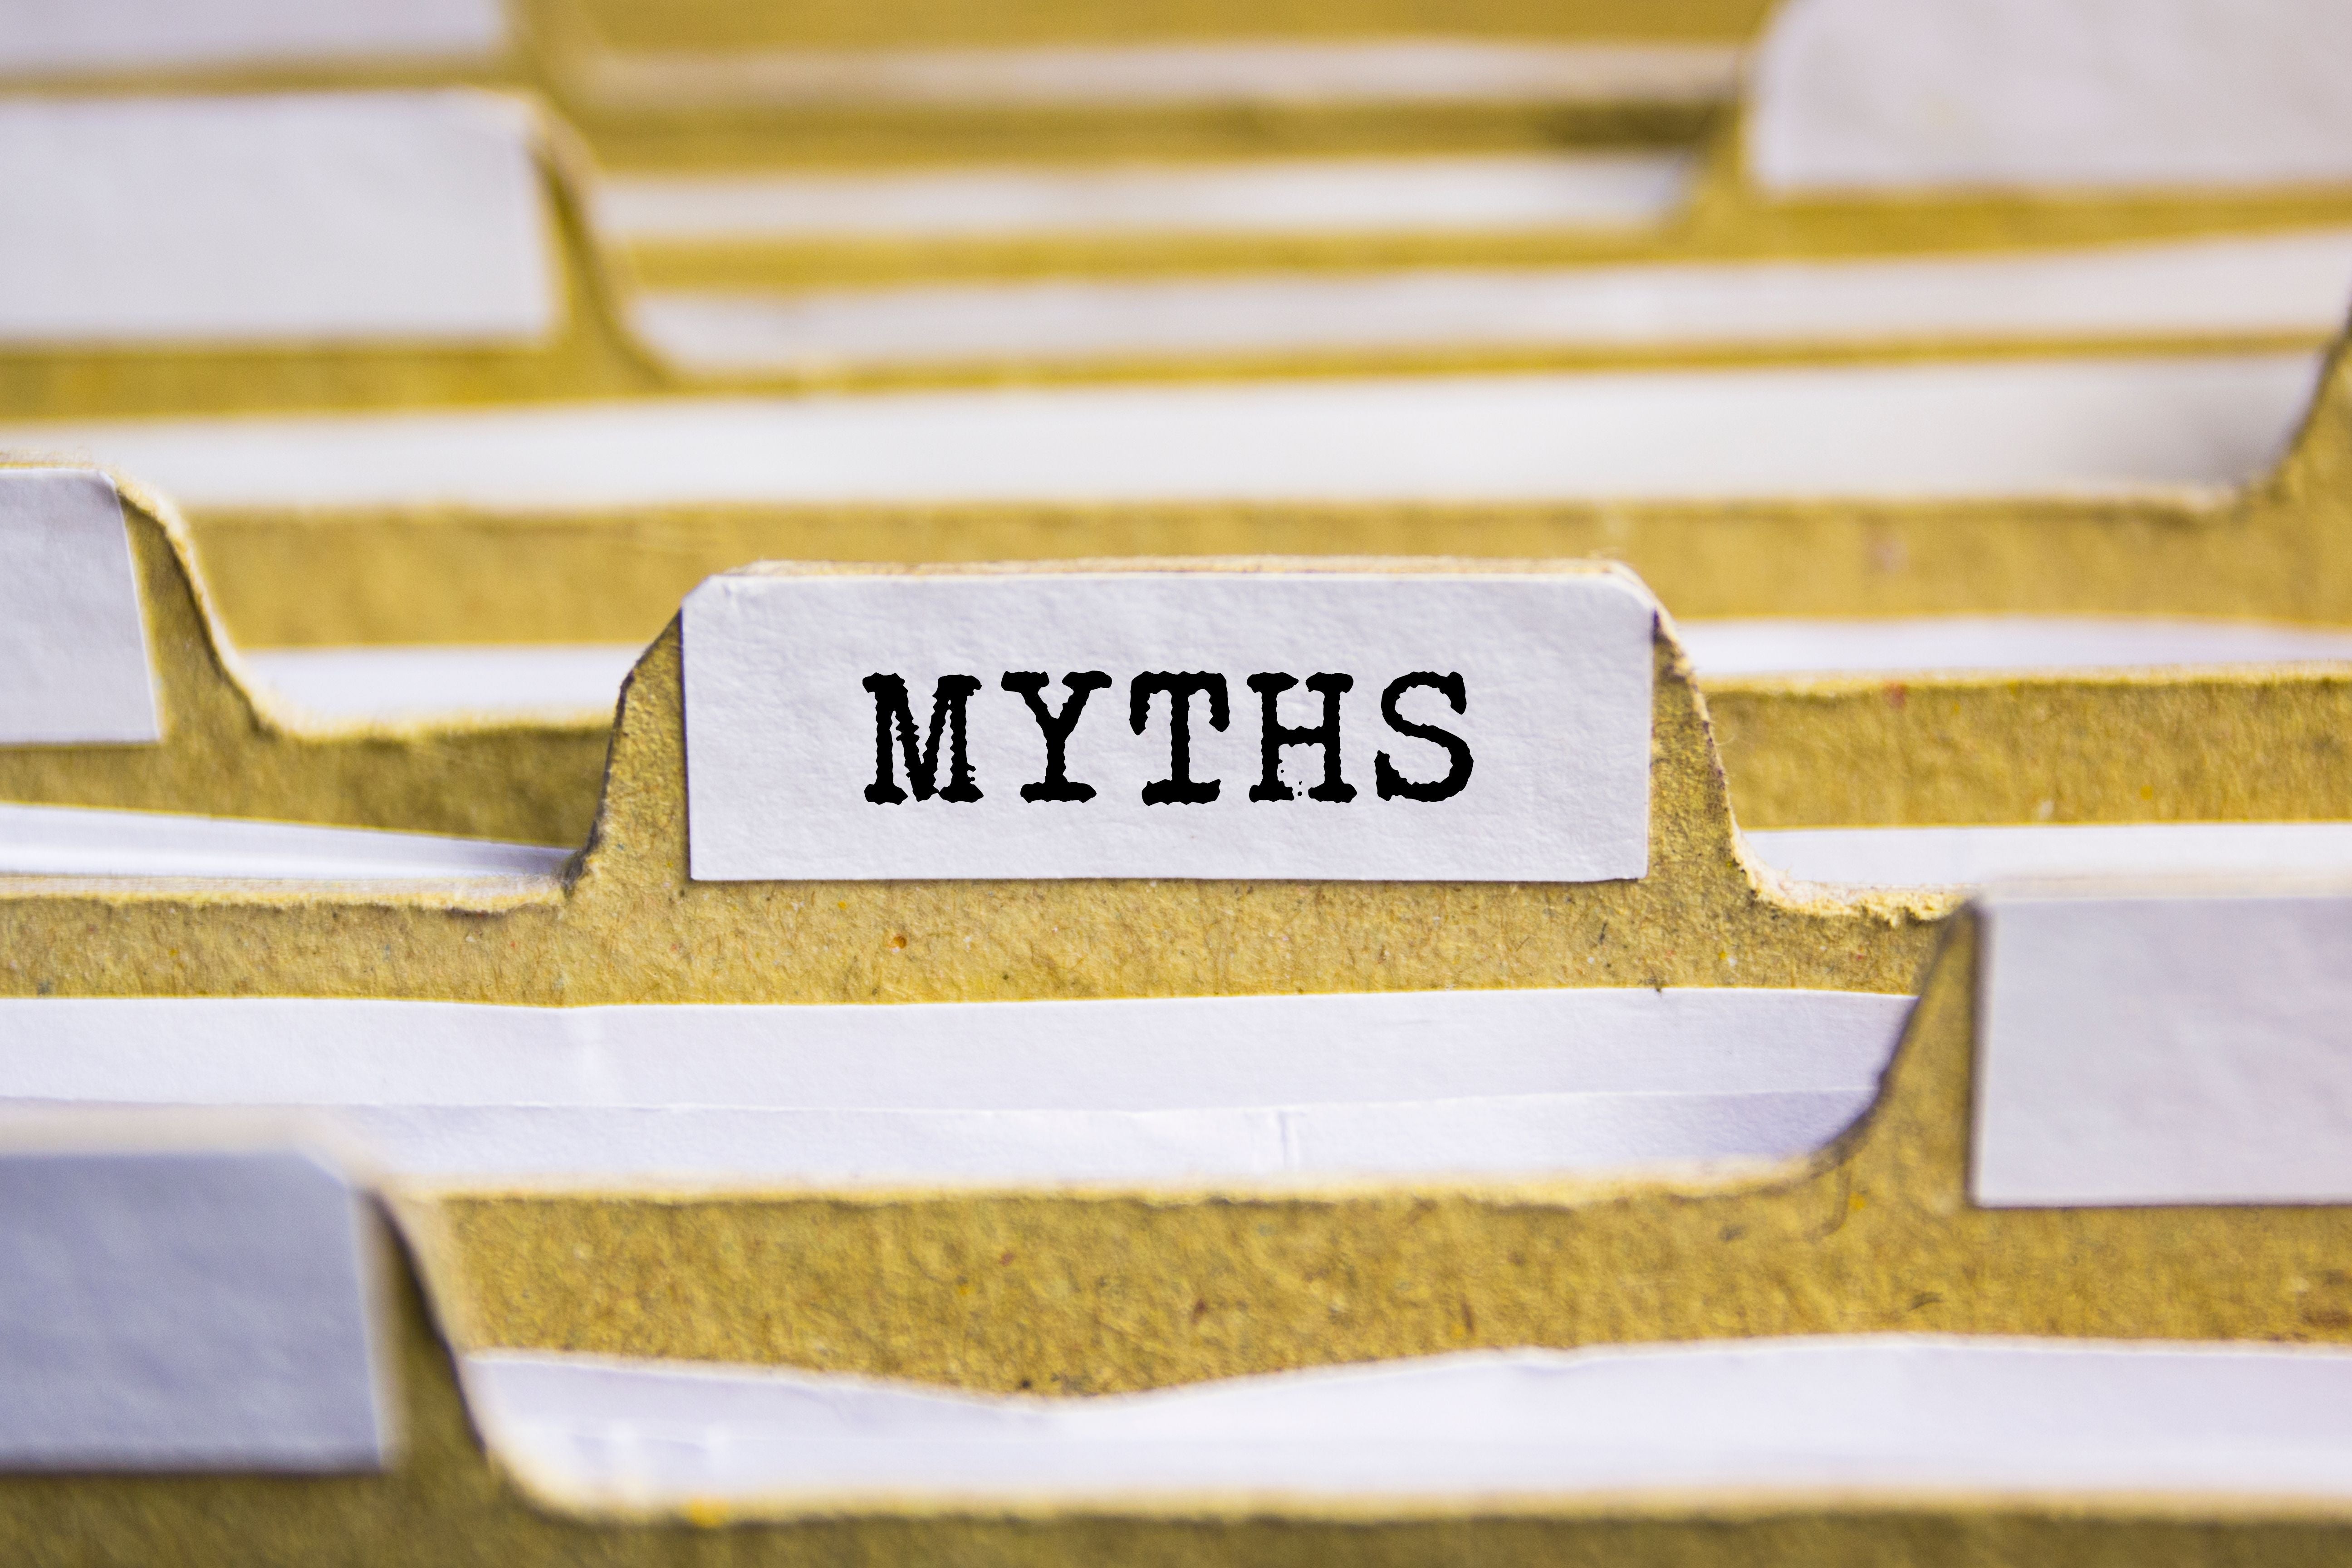 Four common CBD myths debunked